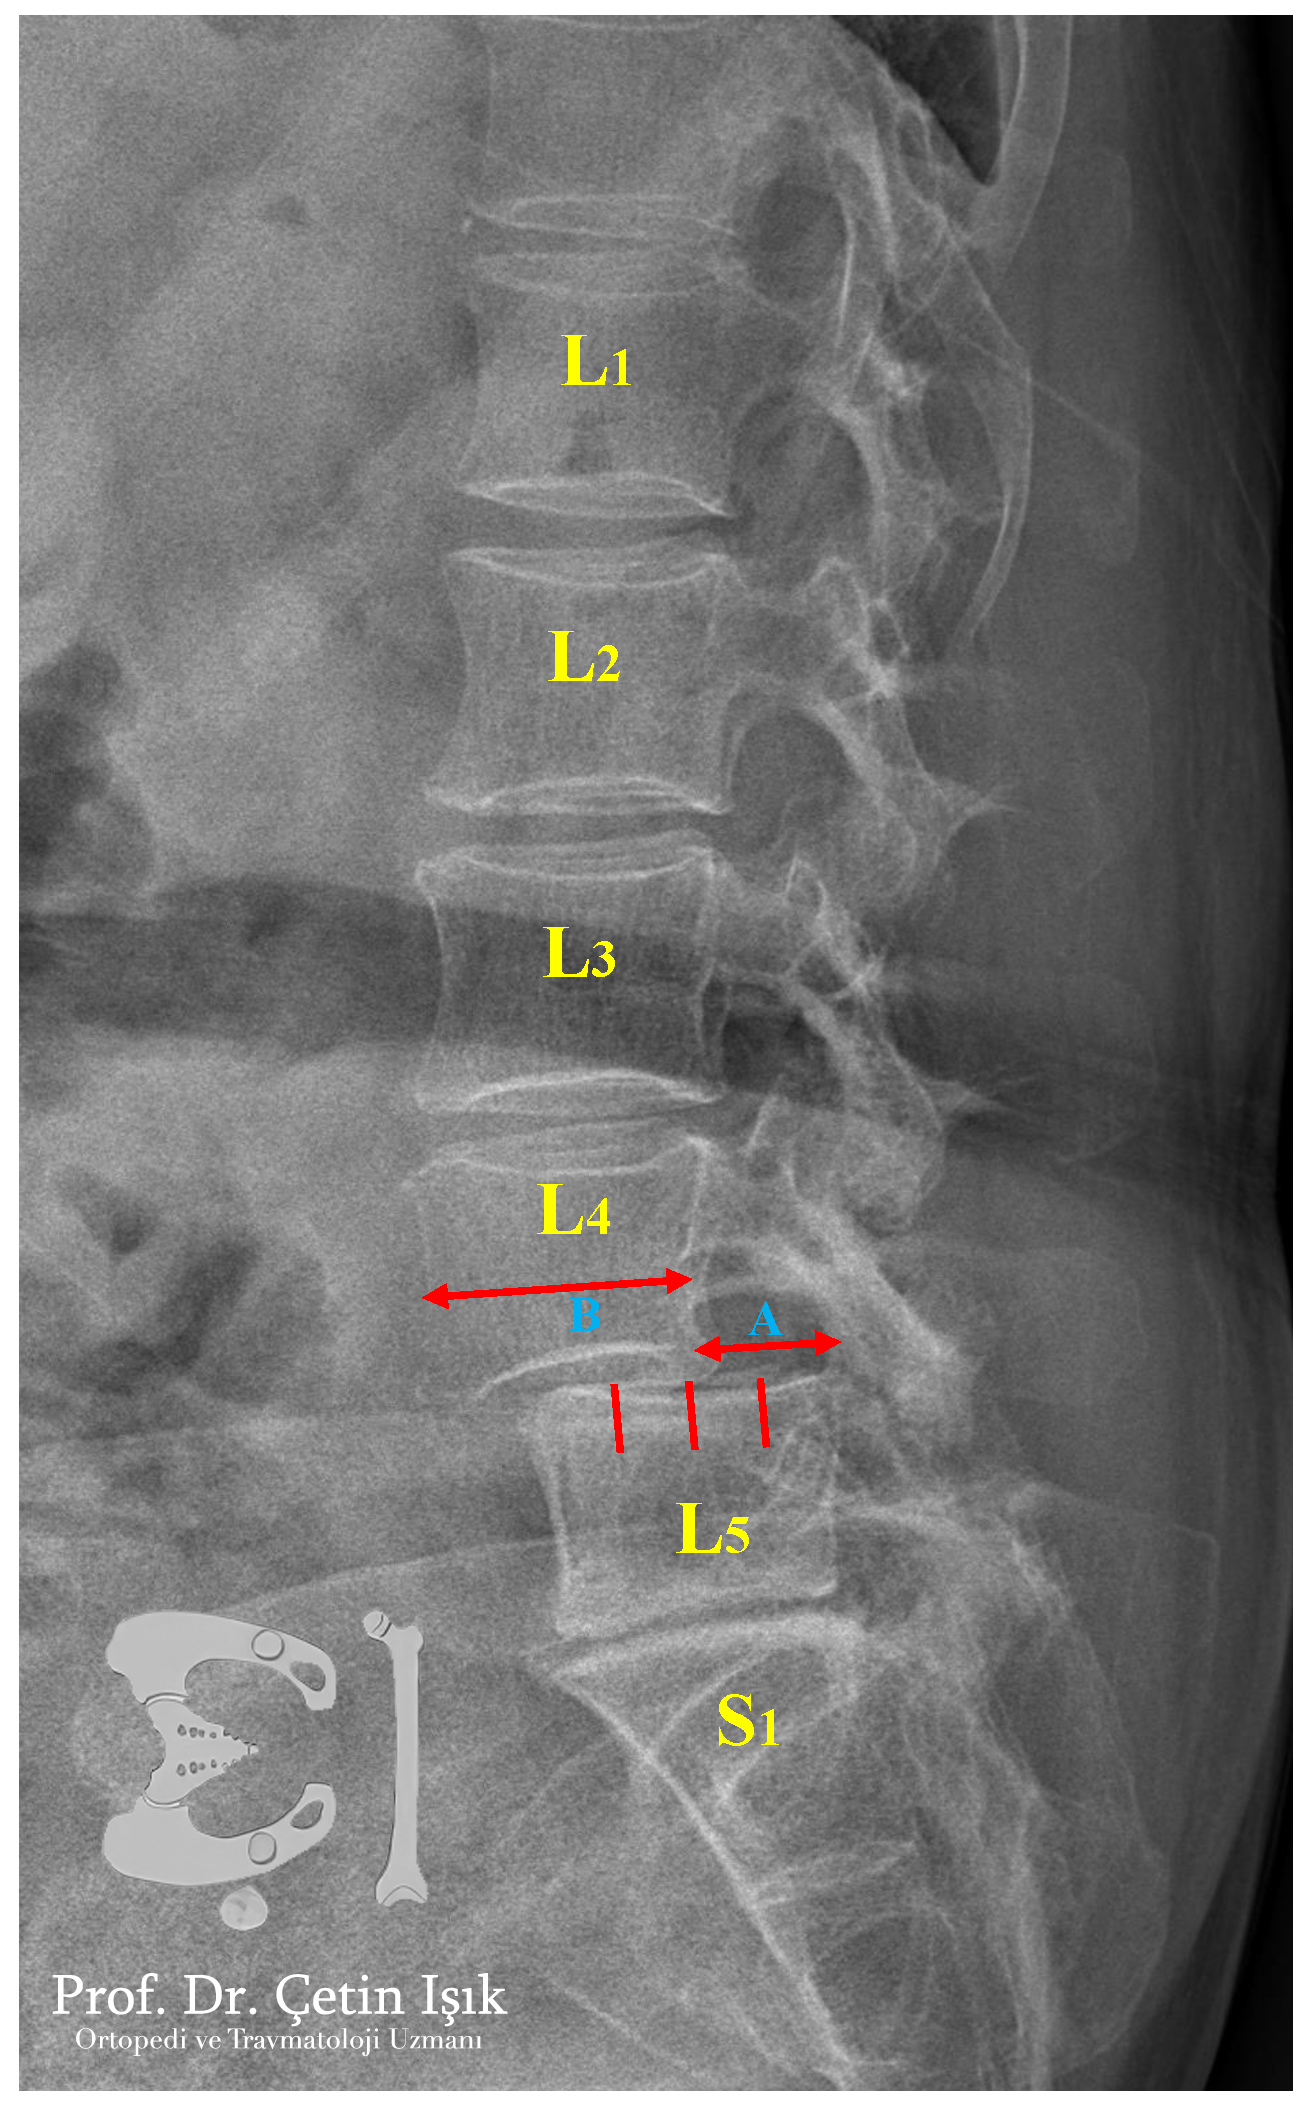 The radiograph shows the sliding of the fifth lumbar vertebra from the upper four lumbar vertebrae.